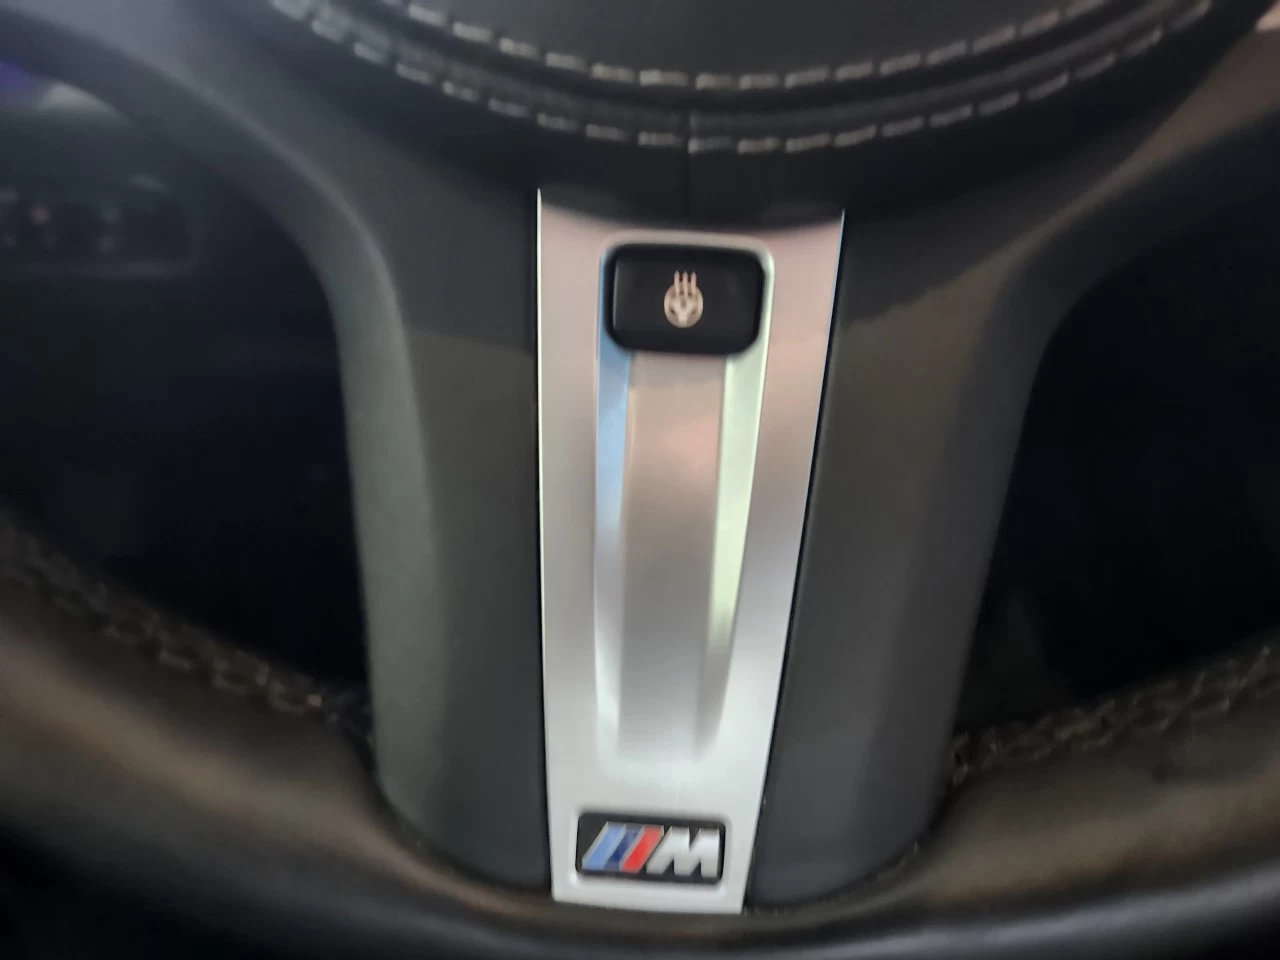 2022 BMW X5 xDrive40i Image principale